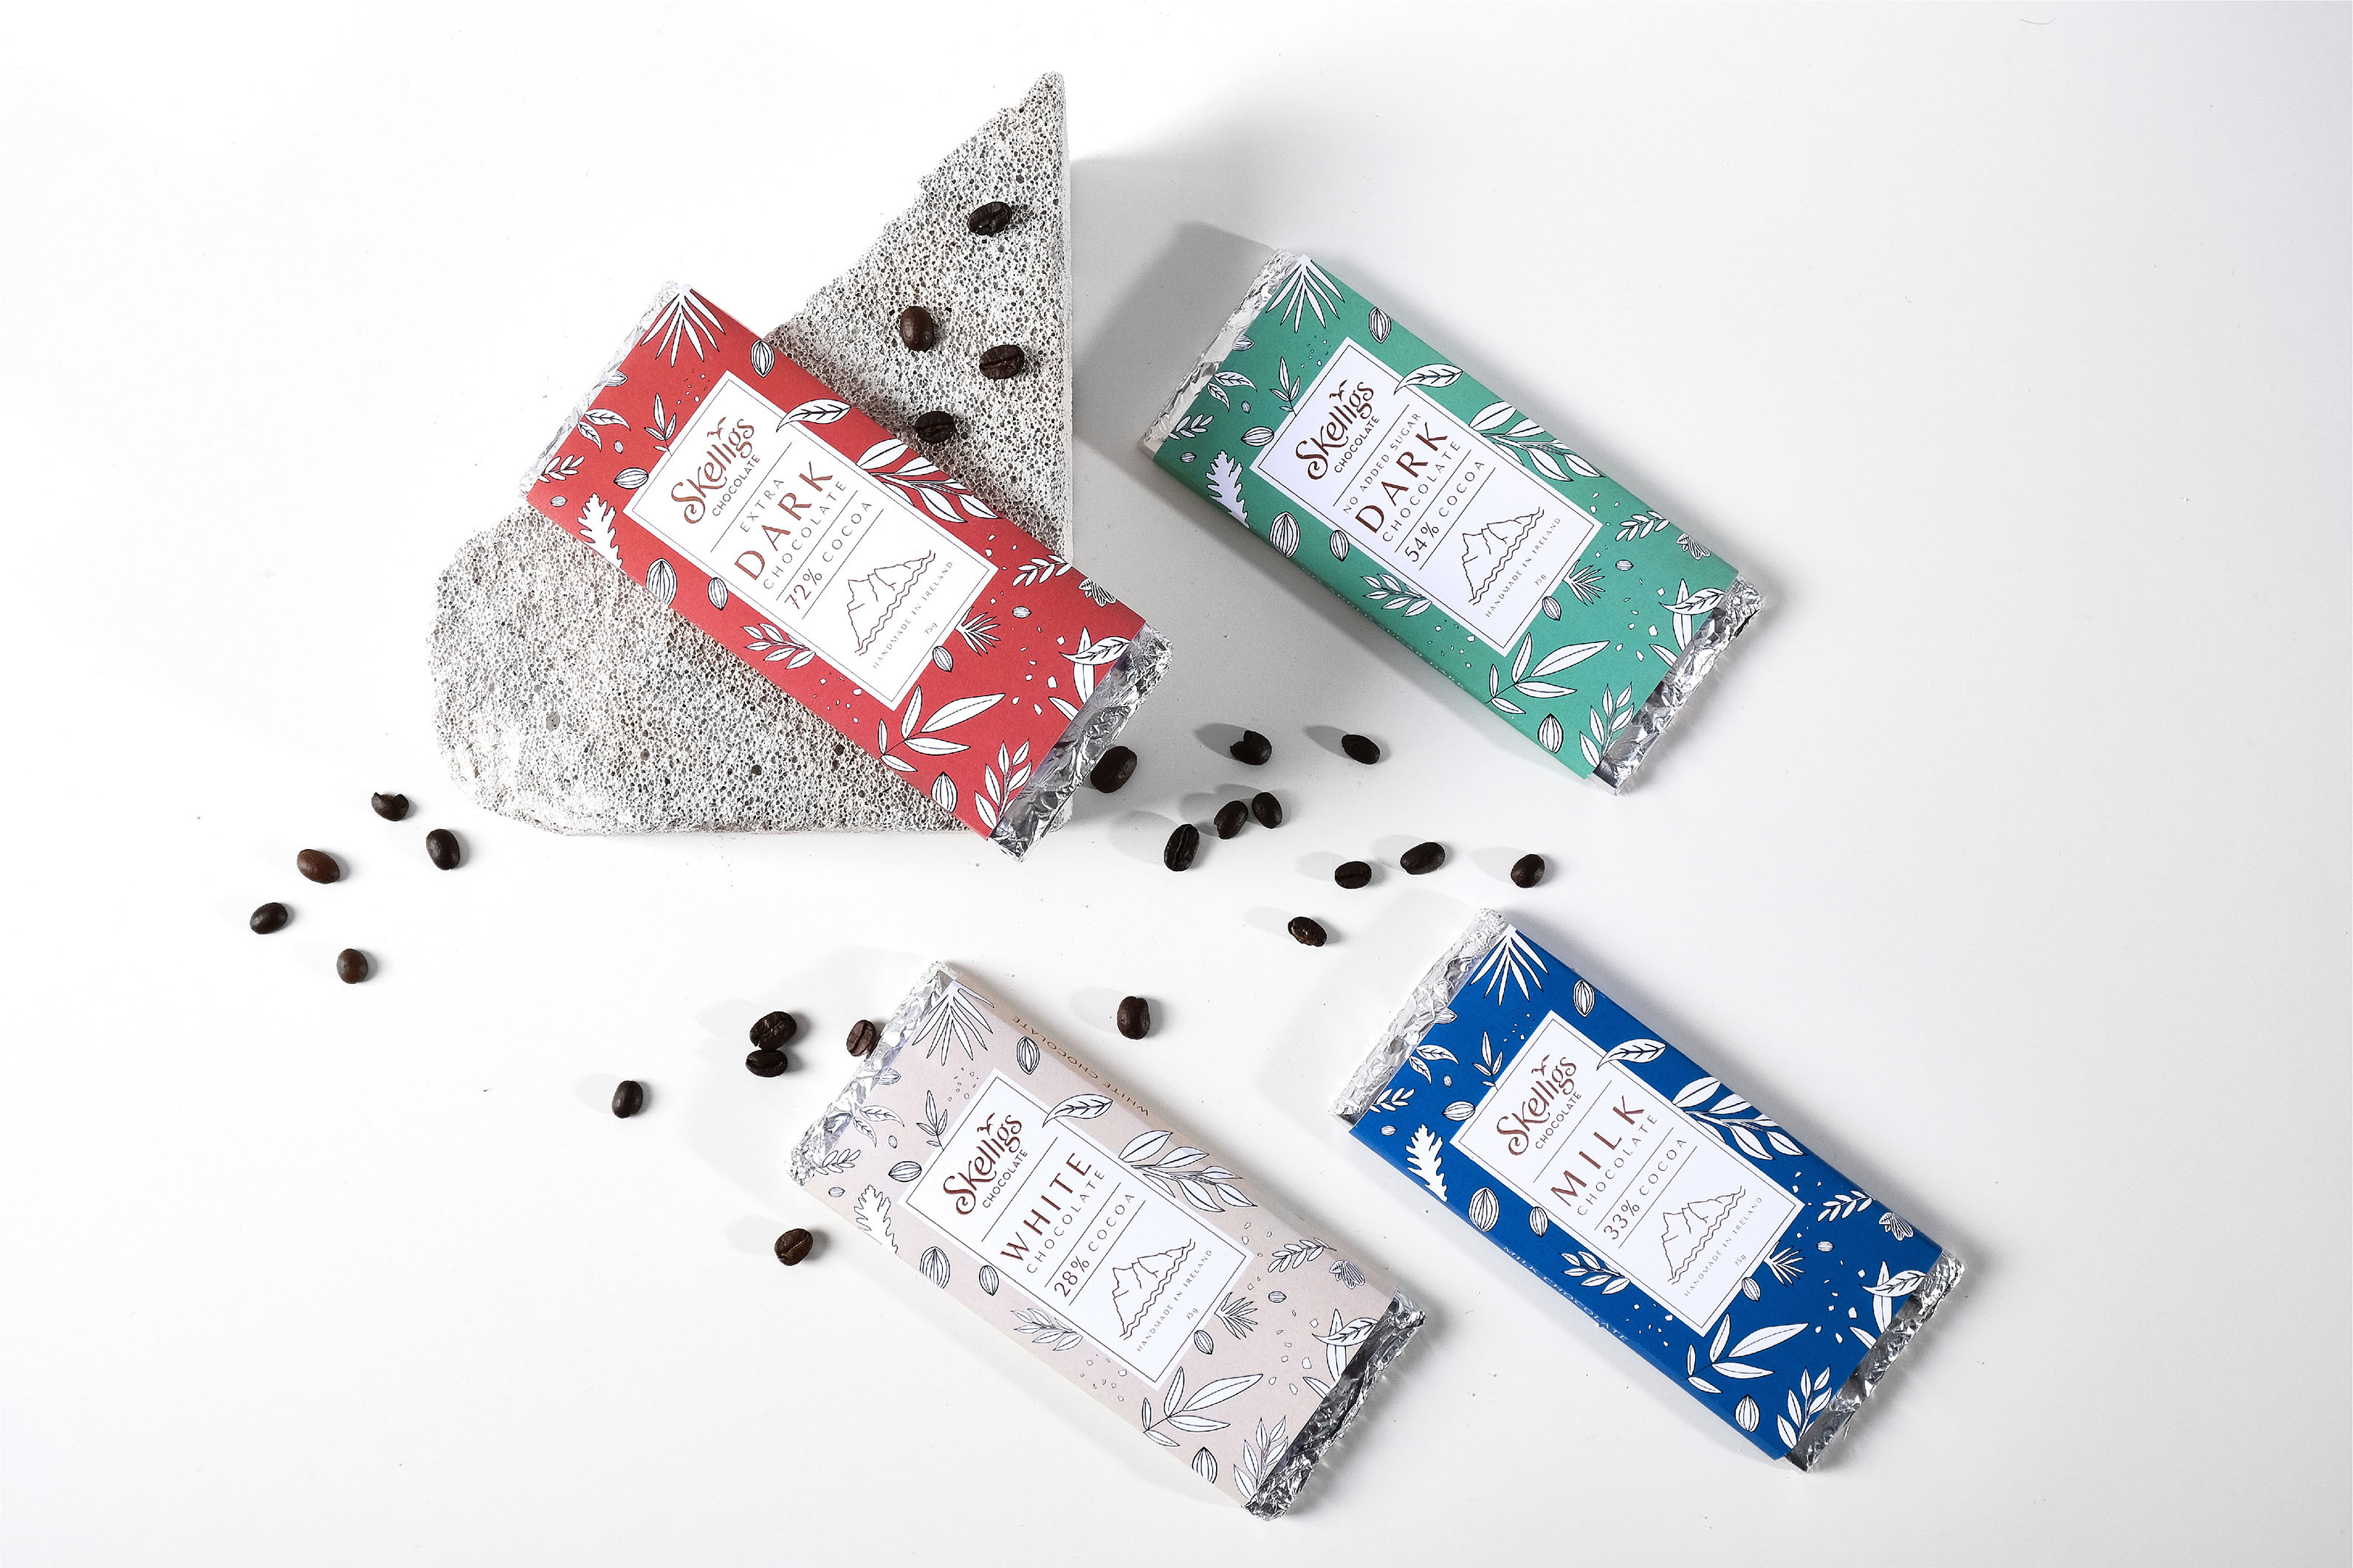 Paper Print Etc. Create Packaging Design for Skelligs Chocolate